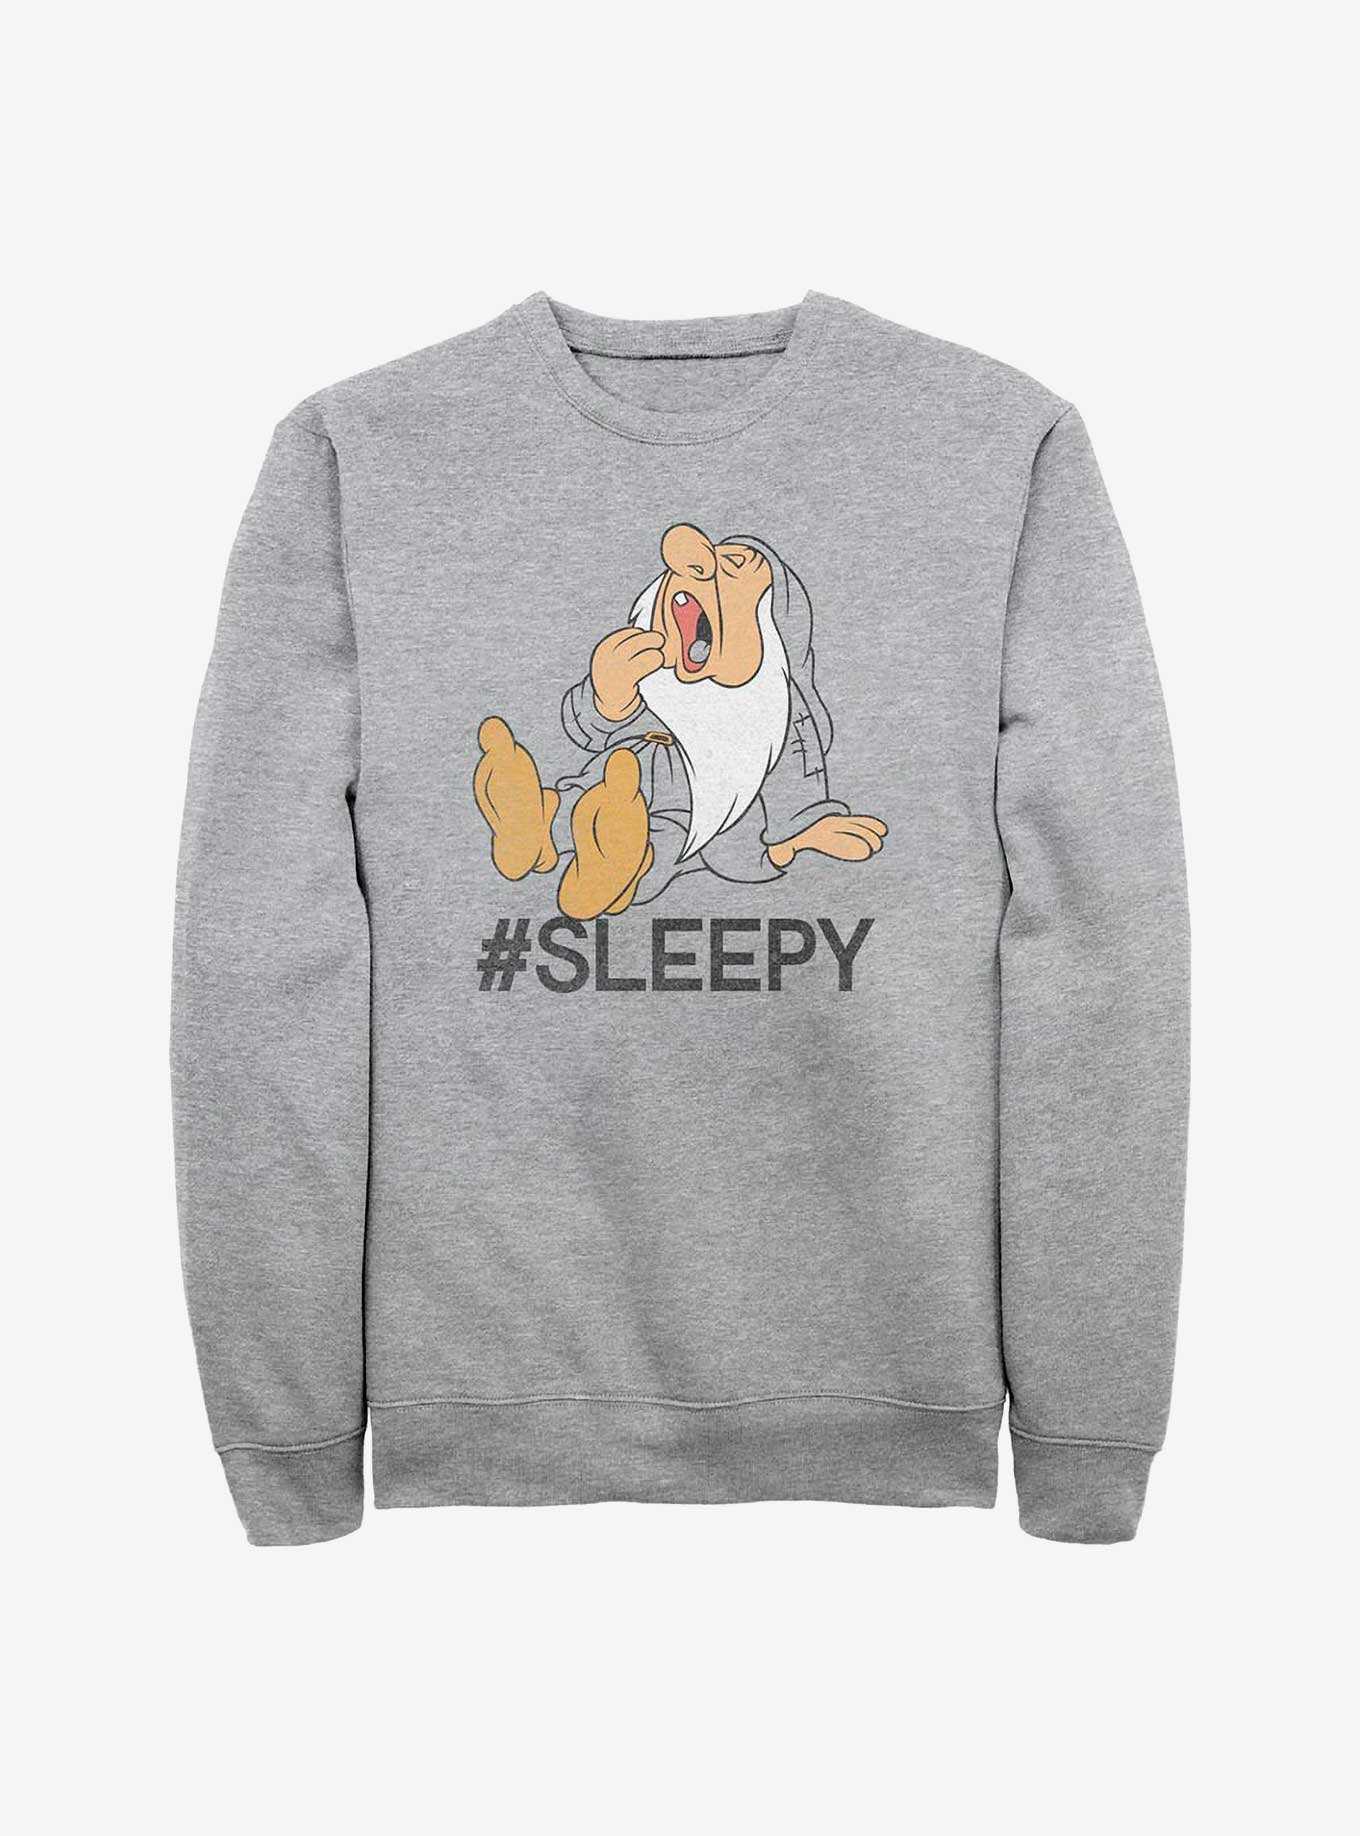 Disney Snow White and the Seven Dwarfs Hashtag Sleepy Sweatshirt, , hi-res